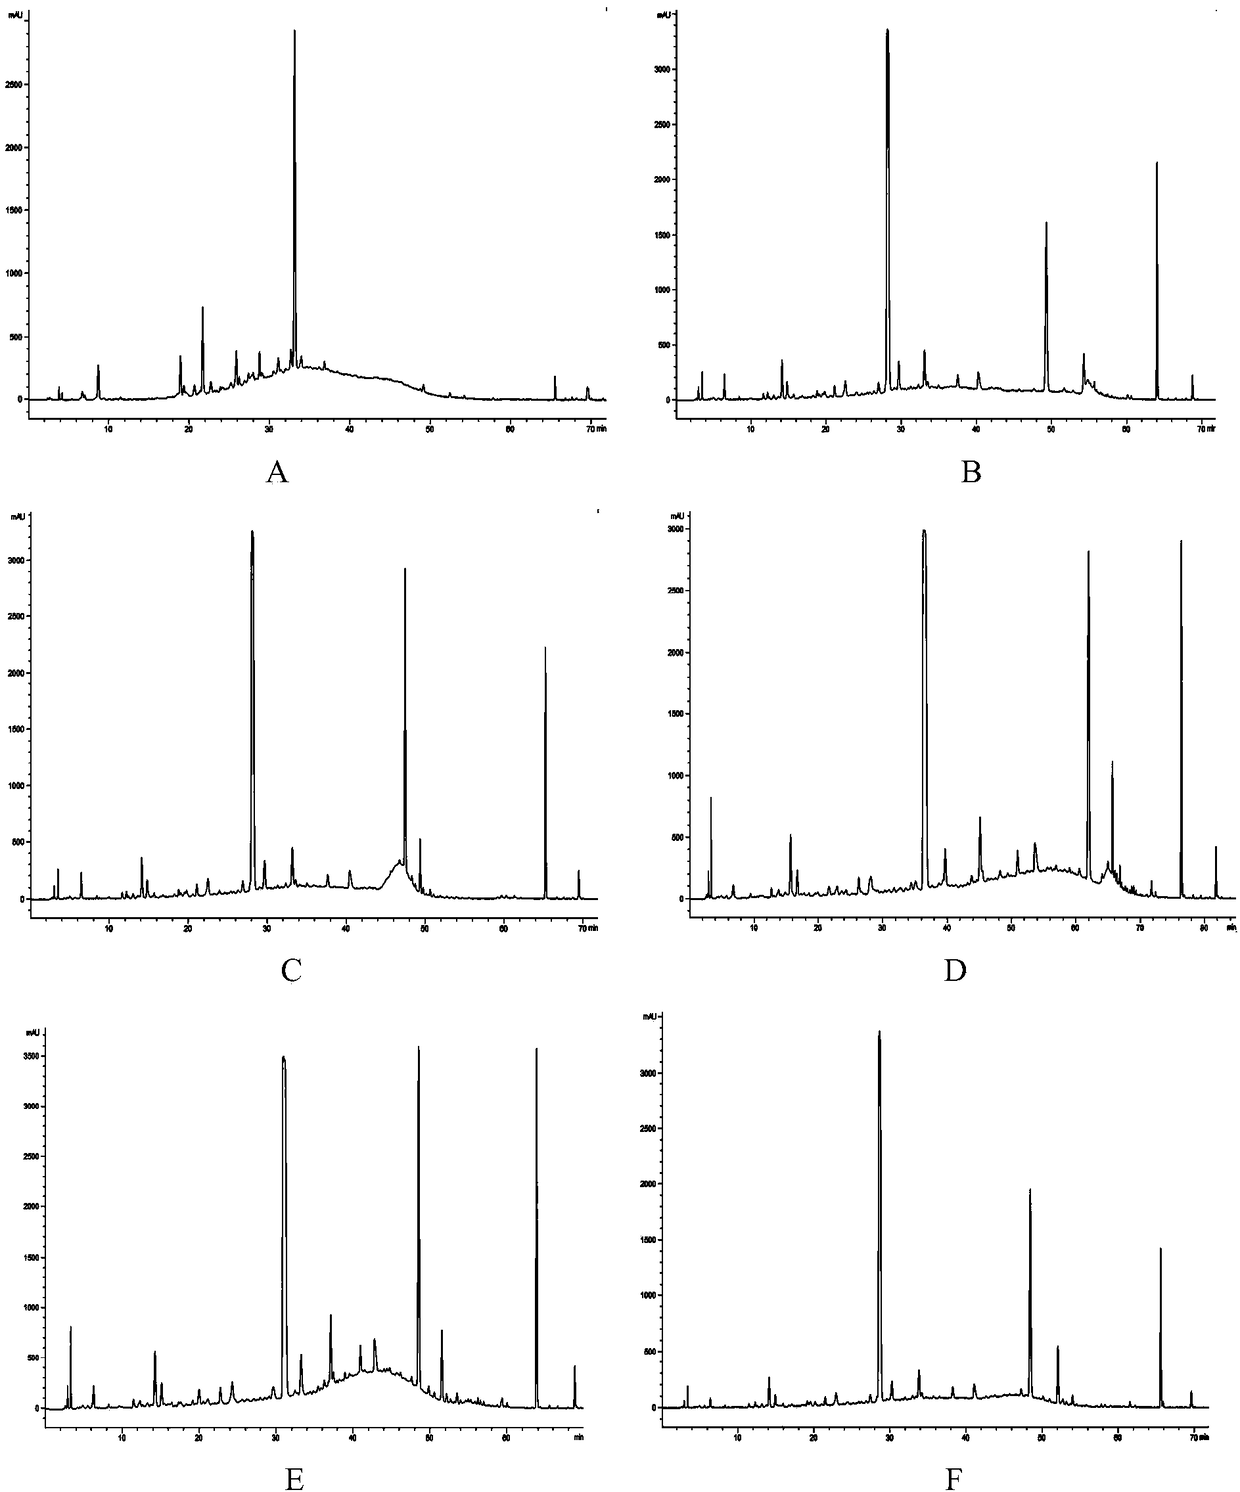 Detection method of hplc fingerprint of Radix Polygoni Multiflori